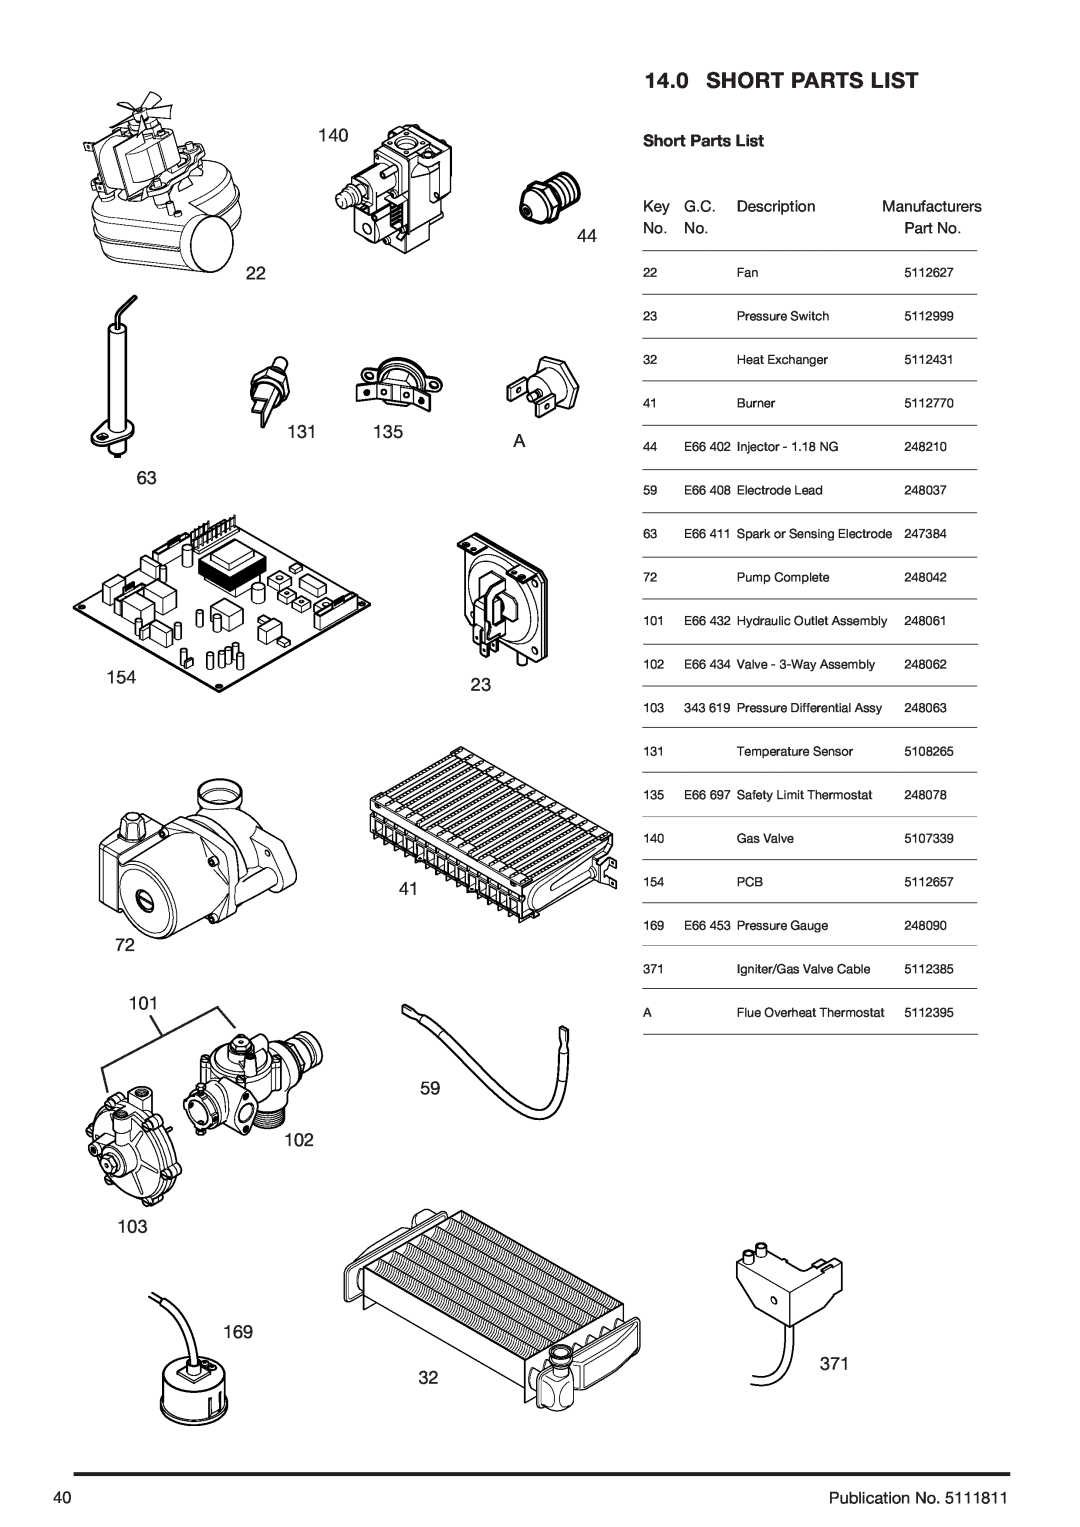 Baxi Potterton 24 Eco HE manual Short Parts List, 102 103 169 